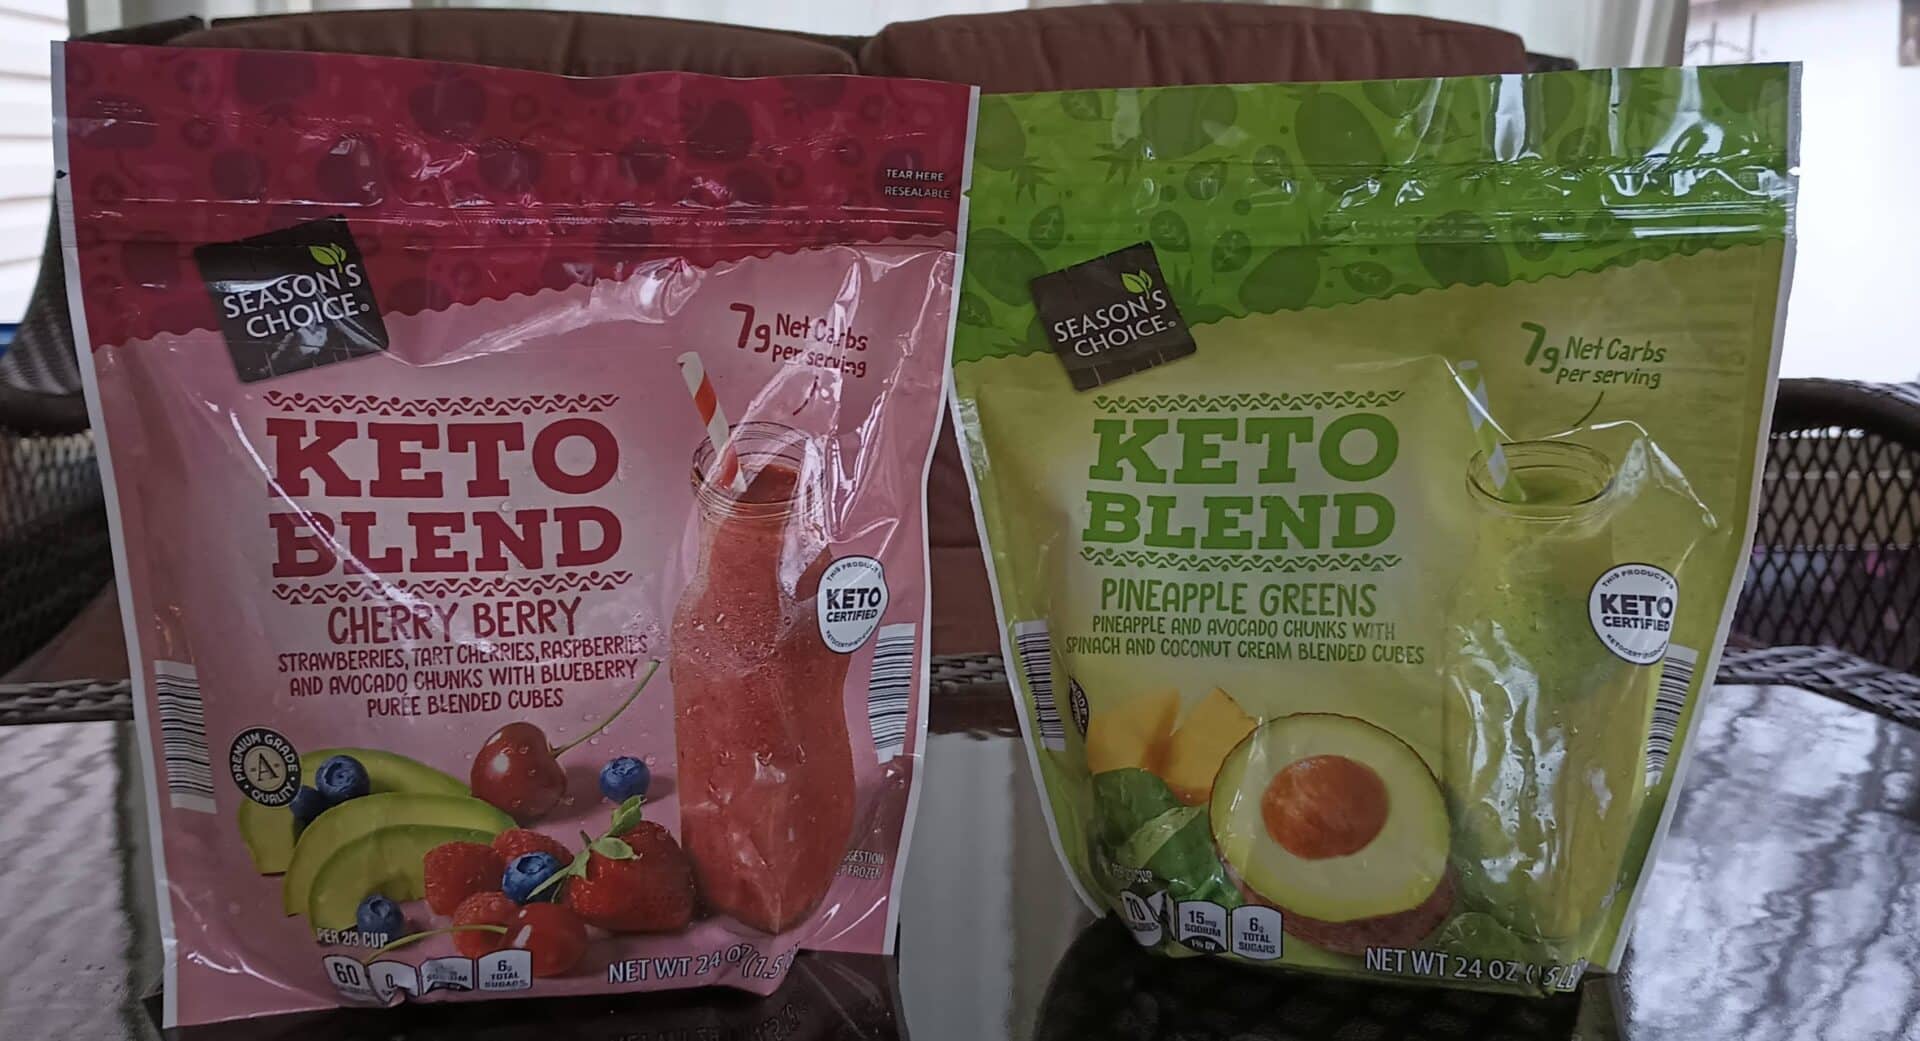 Season's Choice Cherry Berry Keto Blend and Season's Choice Pineapple Greens Keto Blend